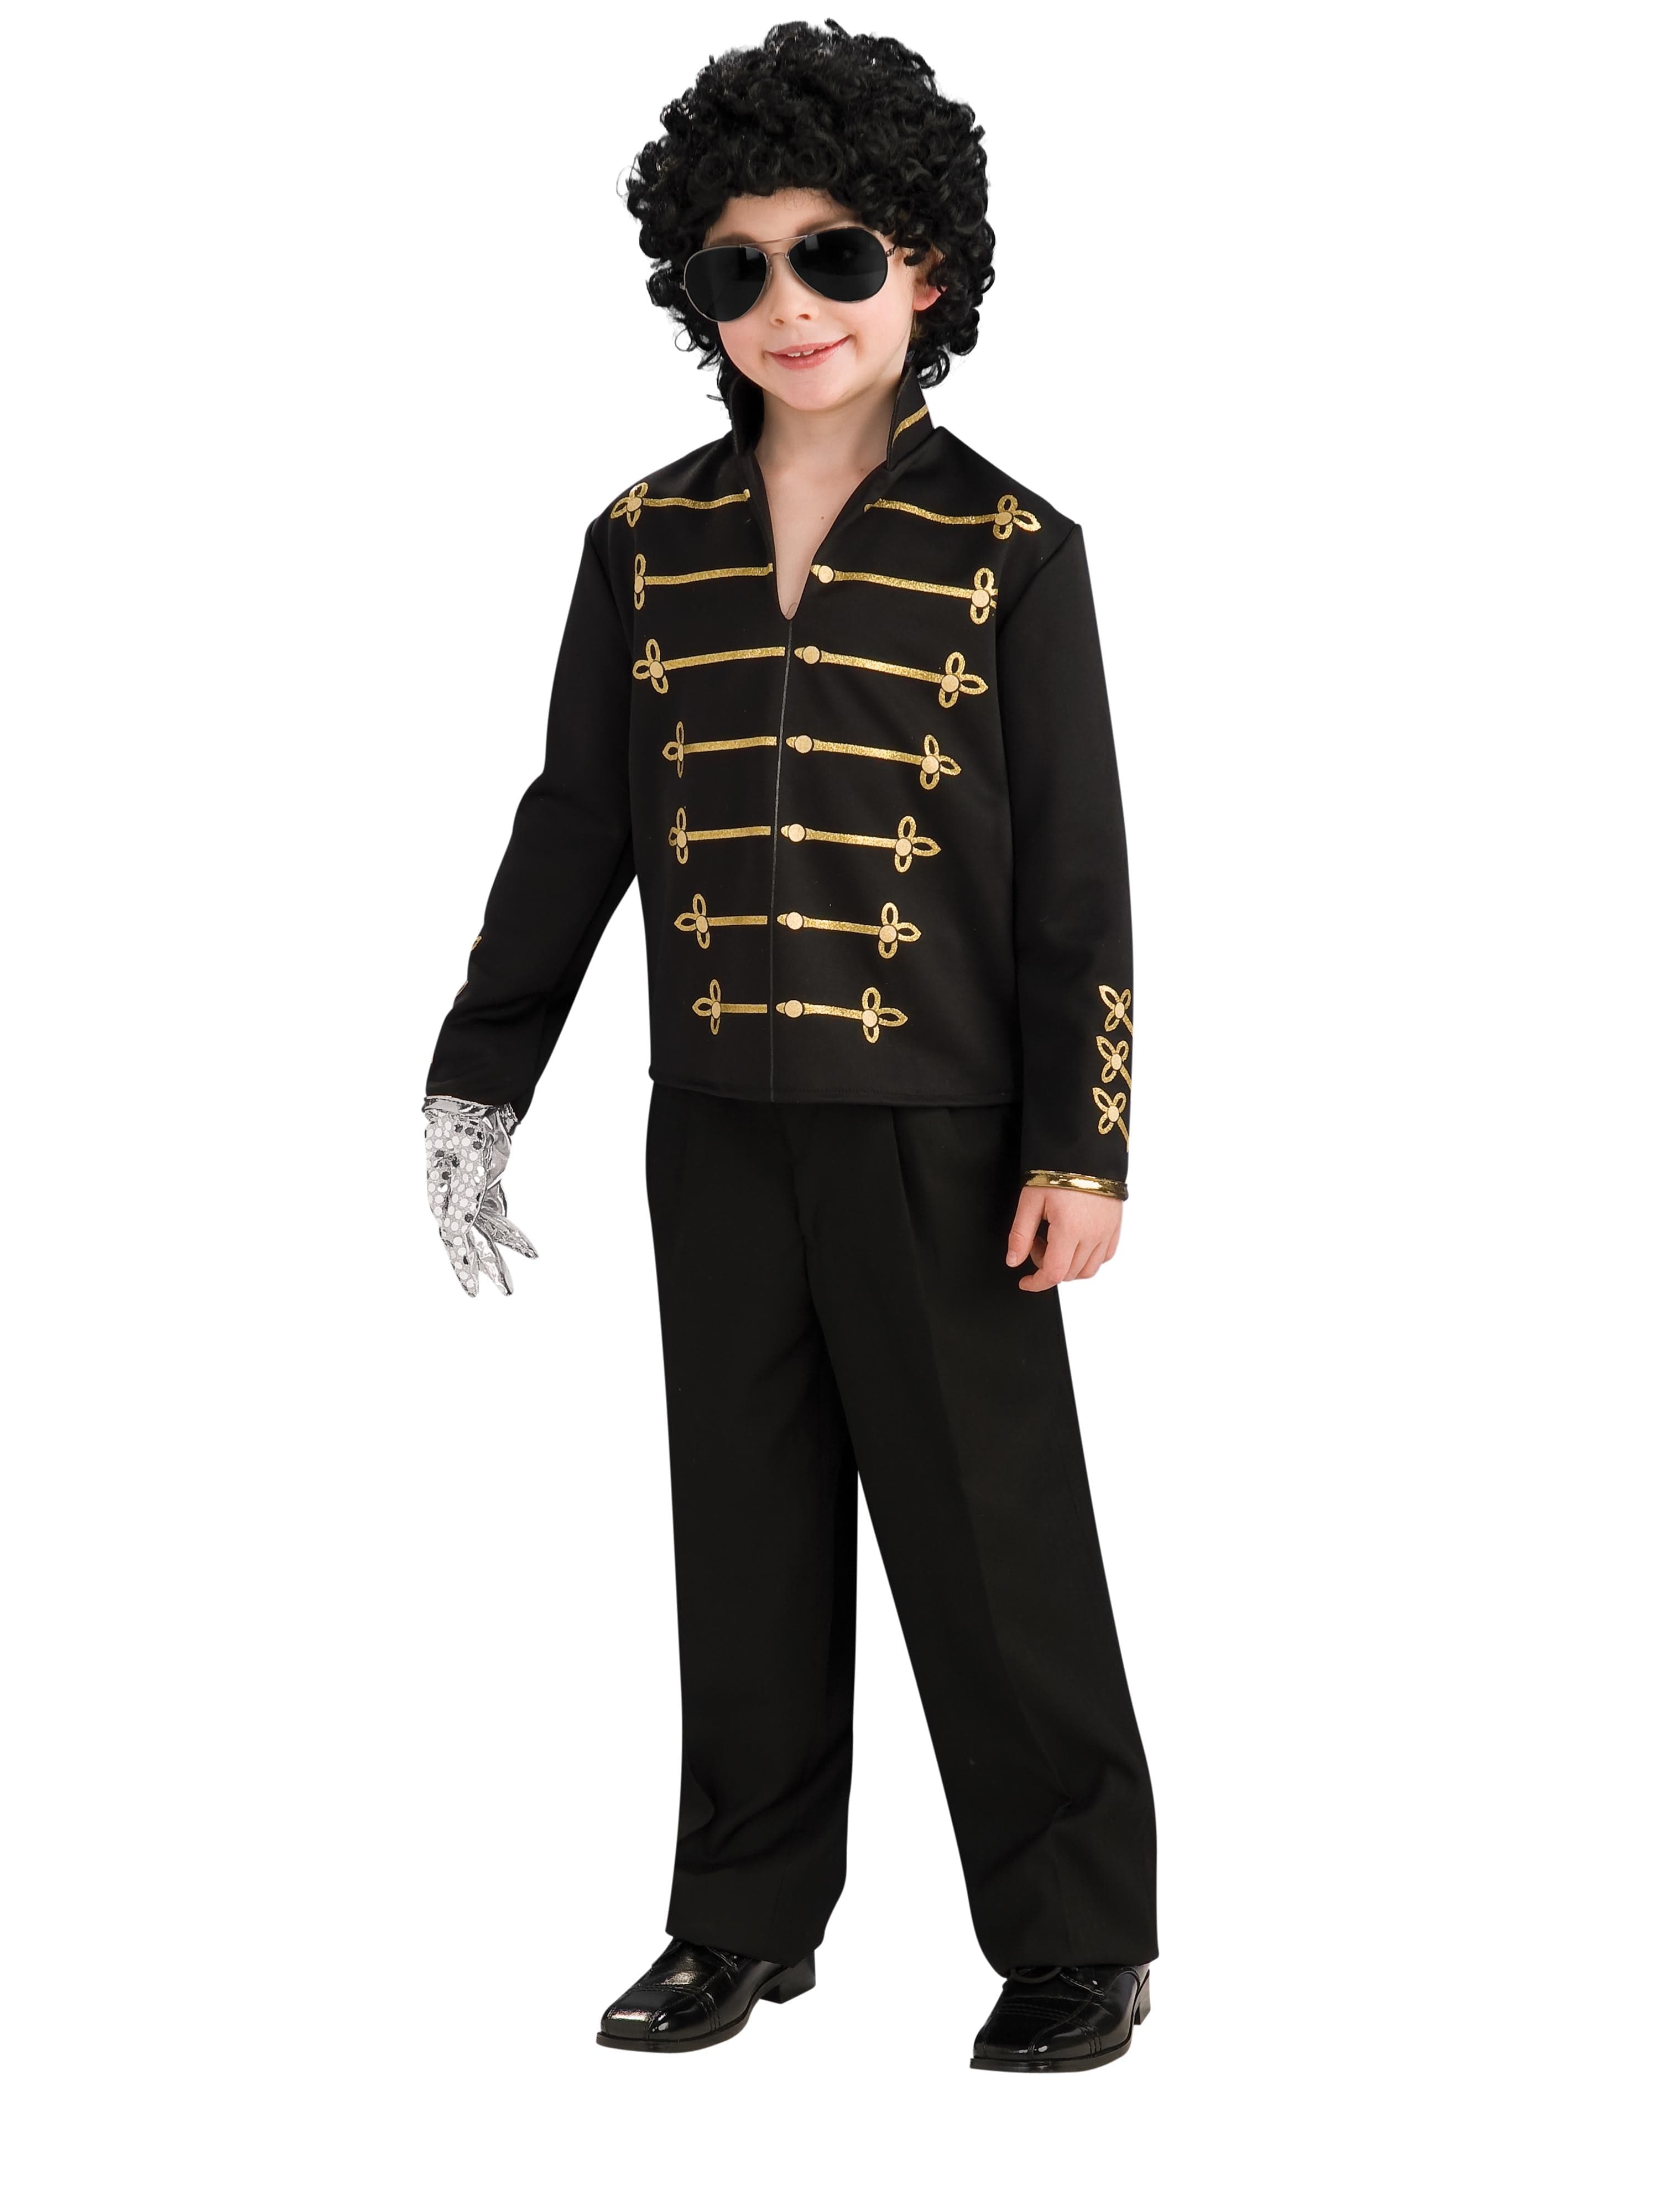 Kids' Michael Jackson Military Jacket Costume - costumes.com